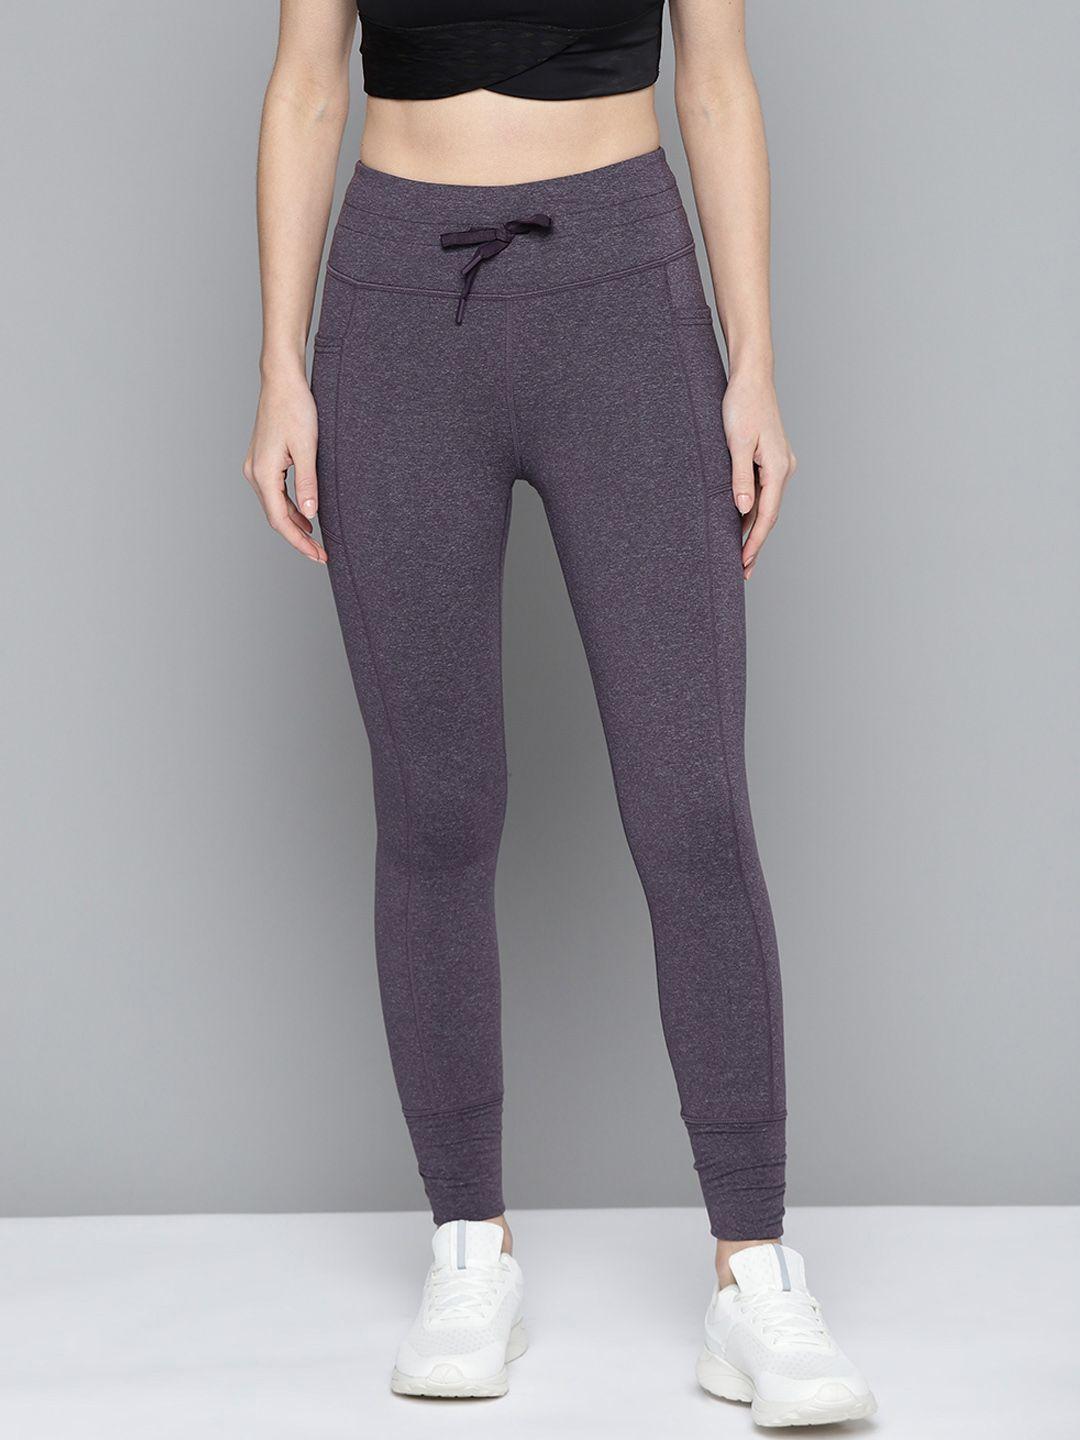 skechers-women-charcoal-grey-high-waist-goflex-luxe-jogging-tights